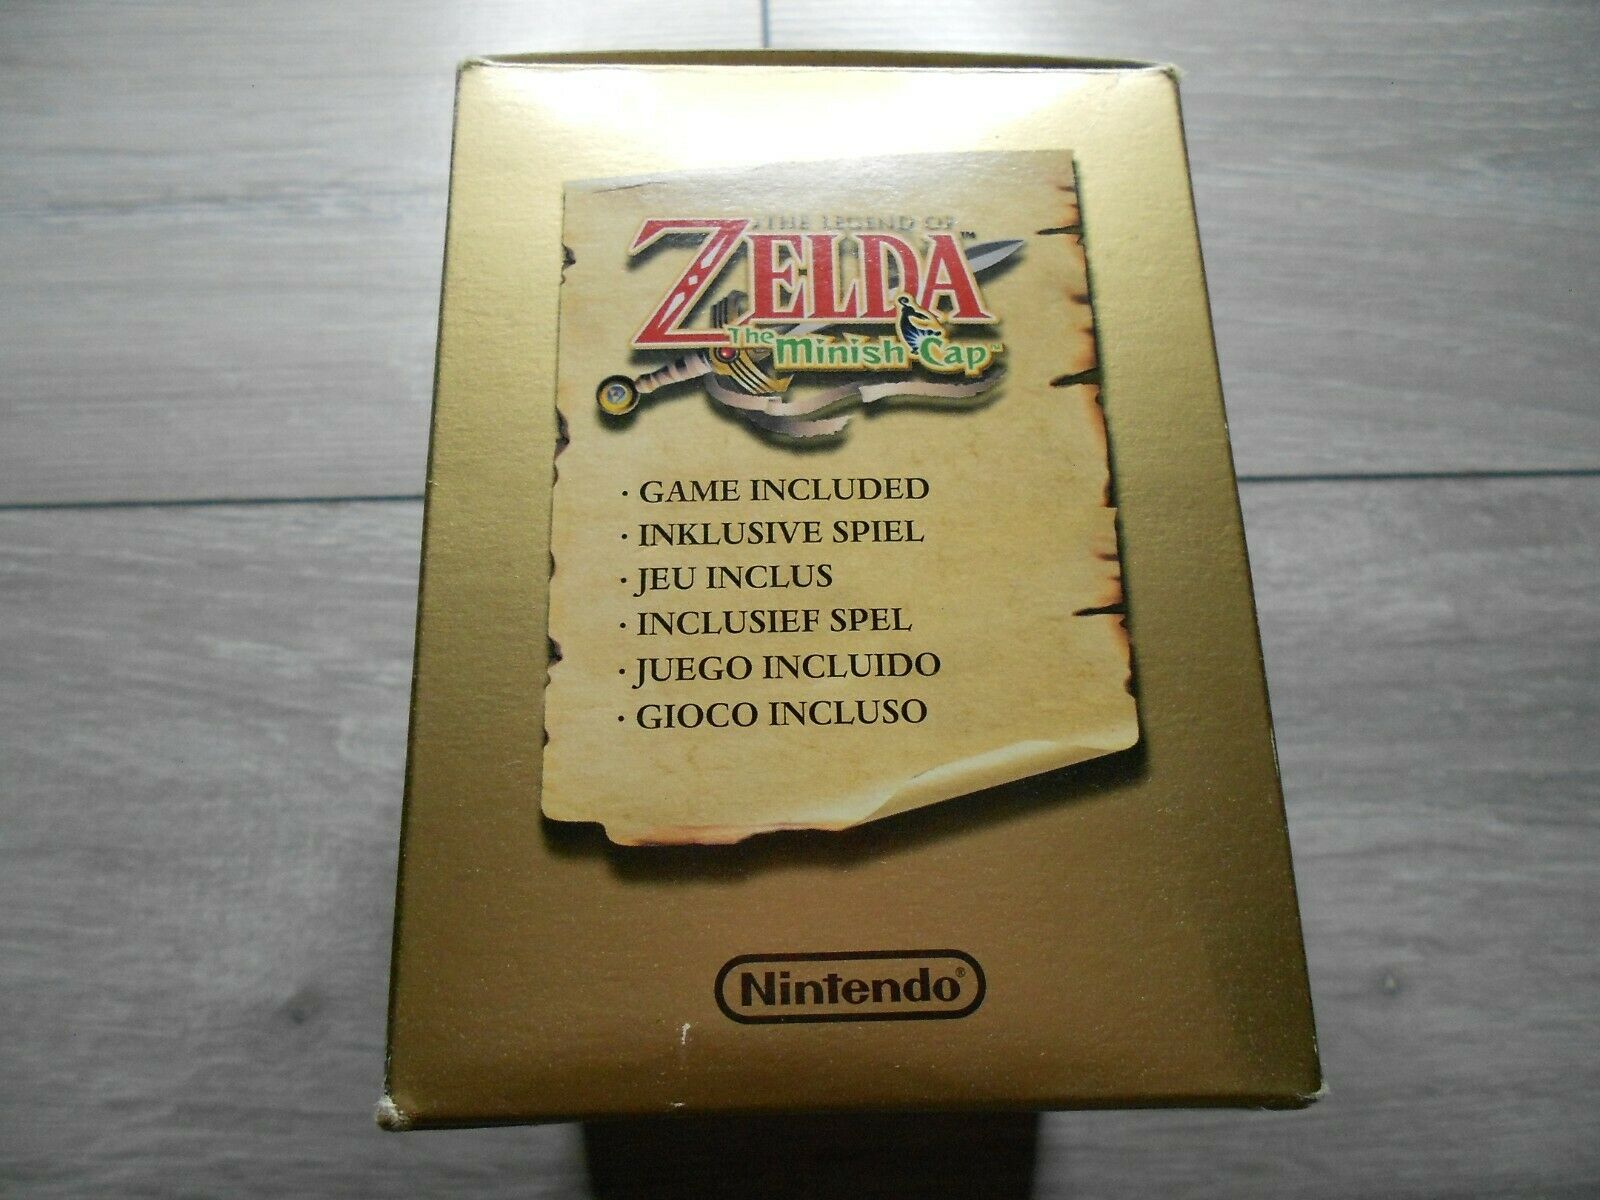 Game Boy Advance SP Zelda упаковка